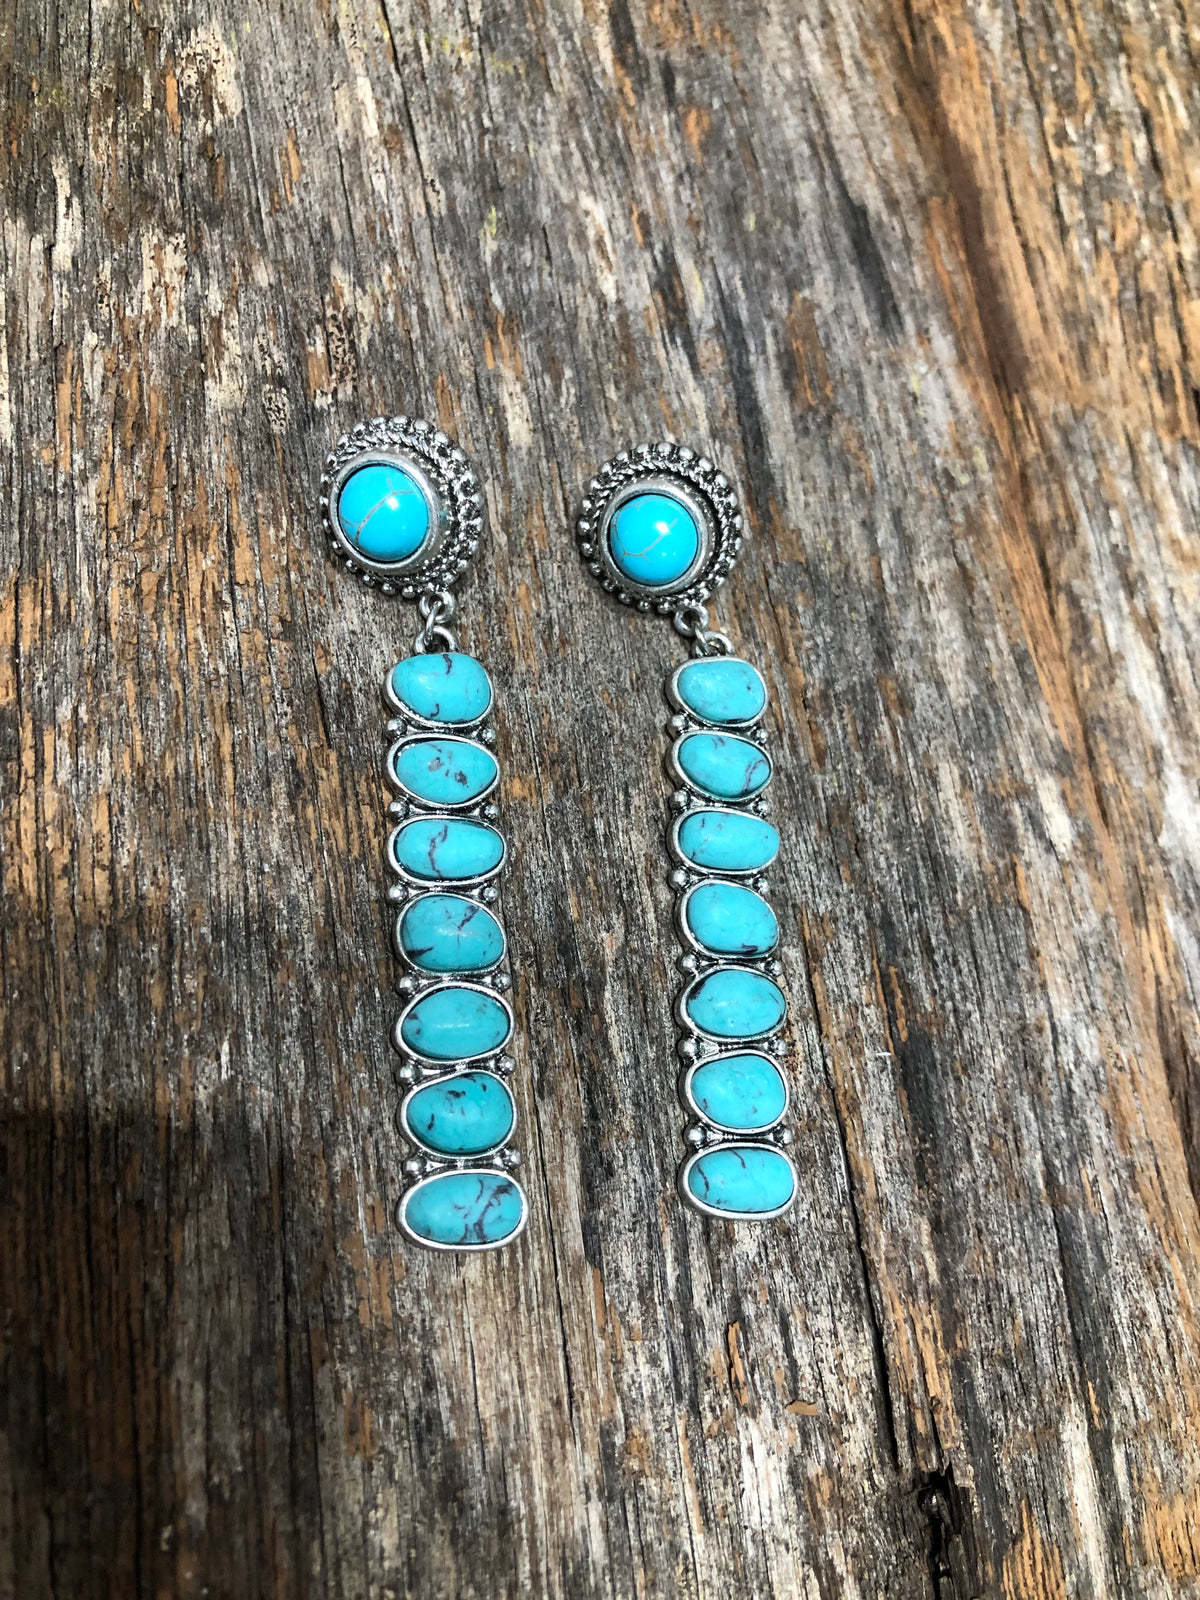 Western Earrings - Turquoise Concho Stone Drop